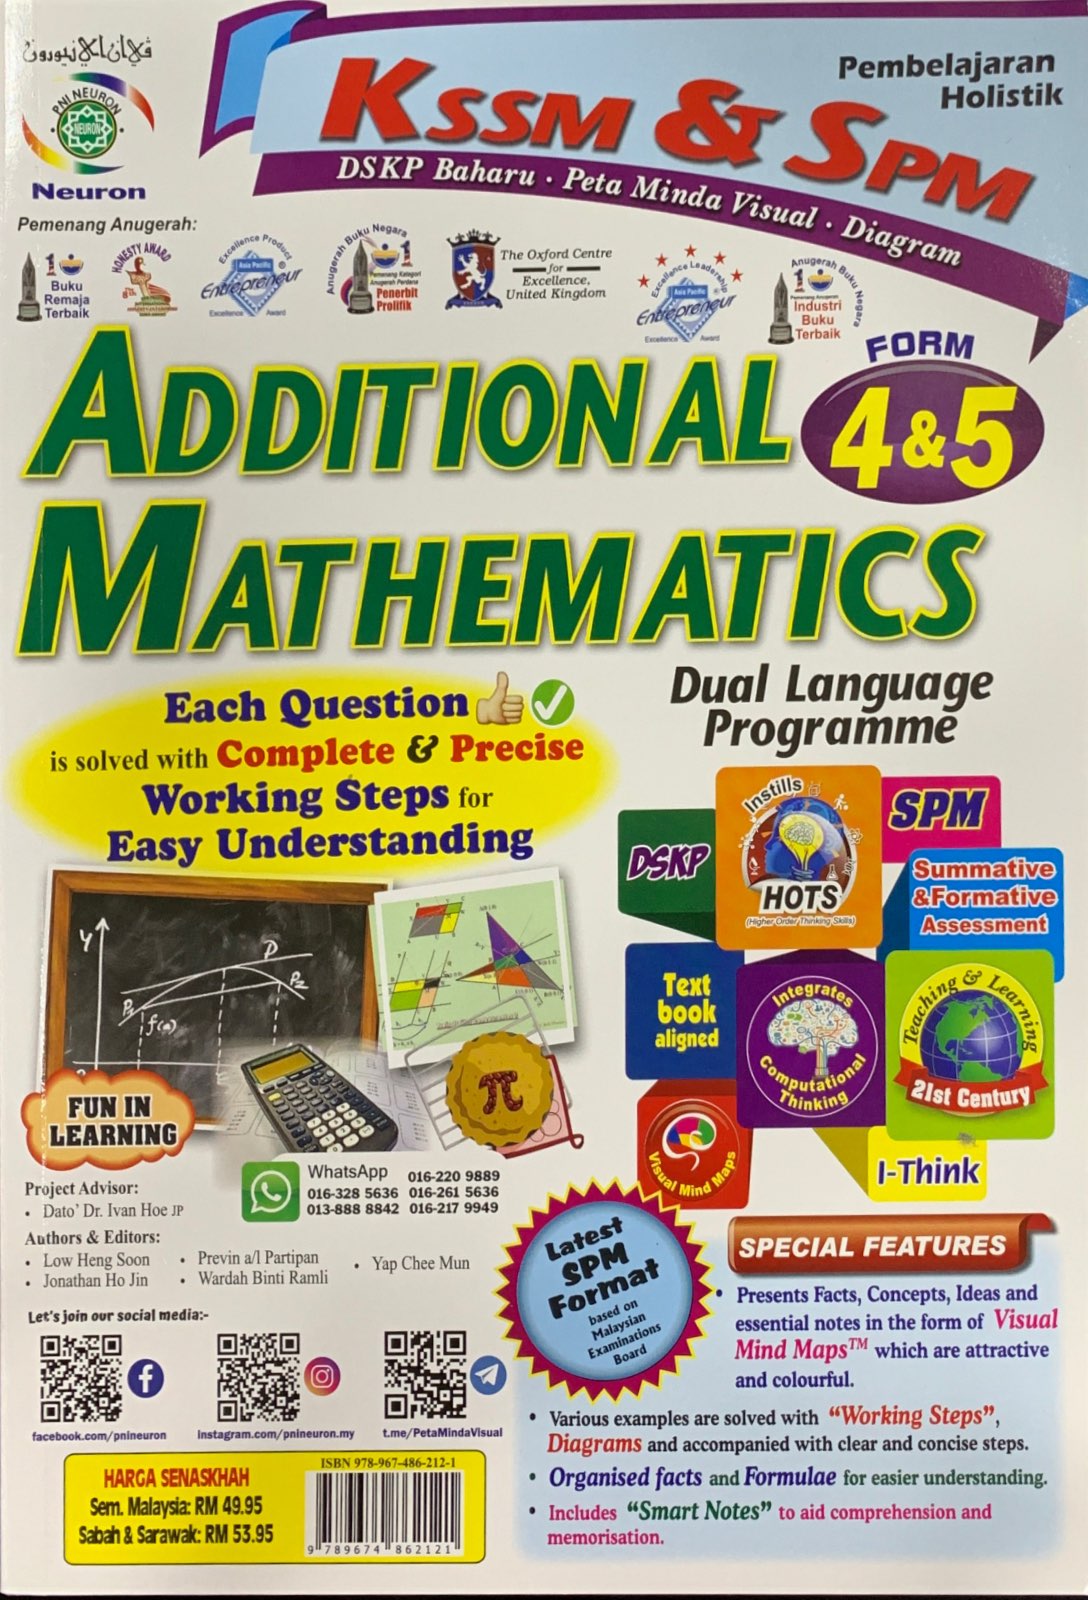 Add math form 4 textbook